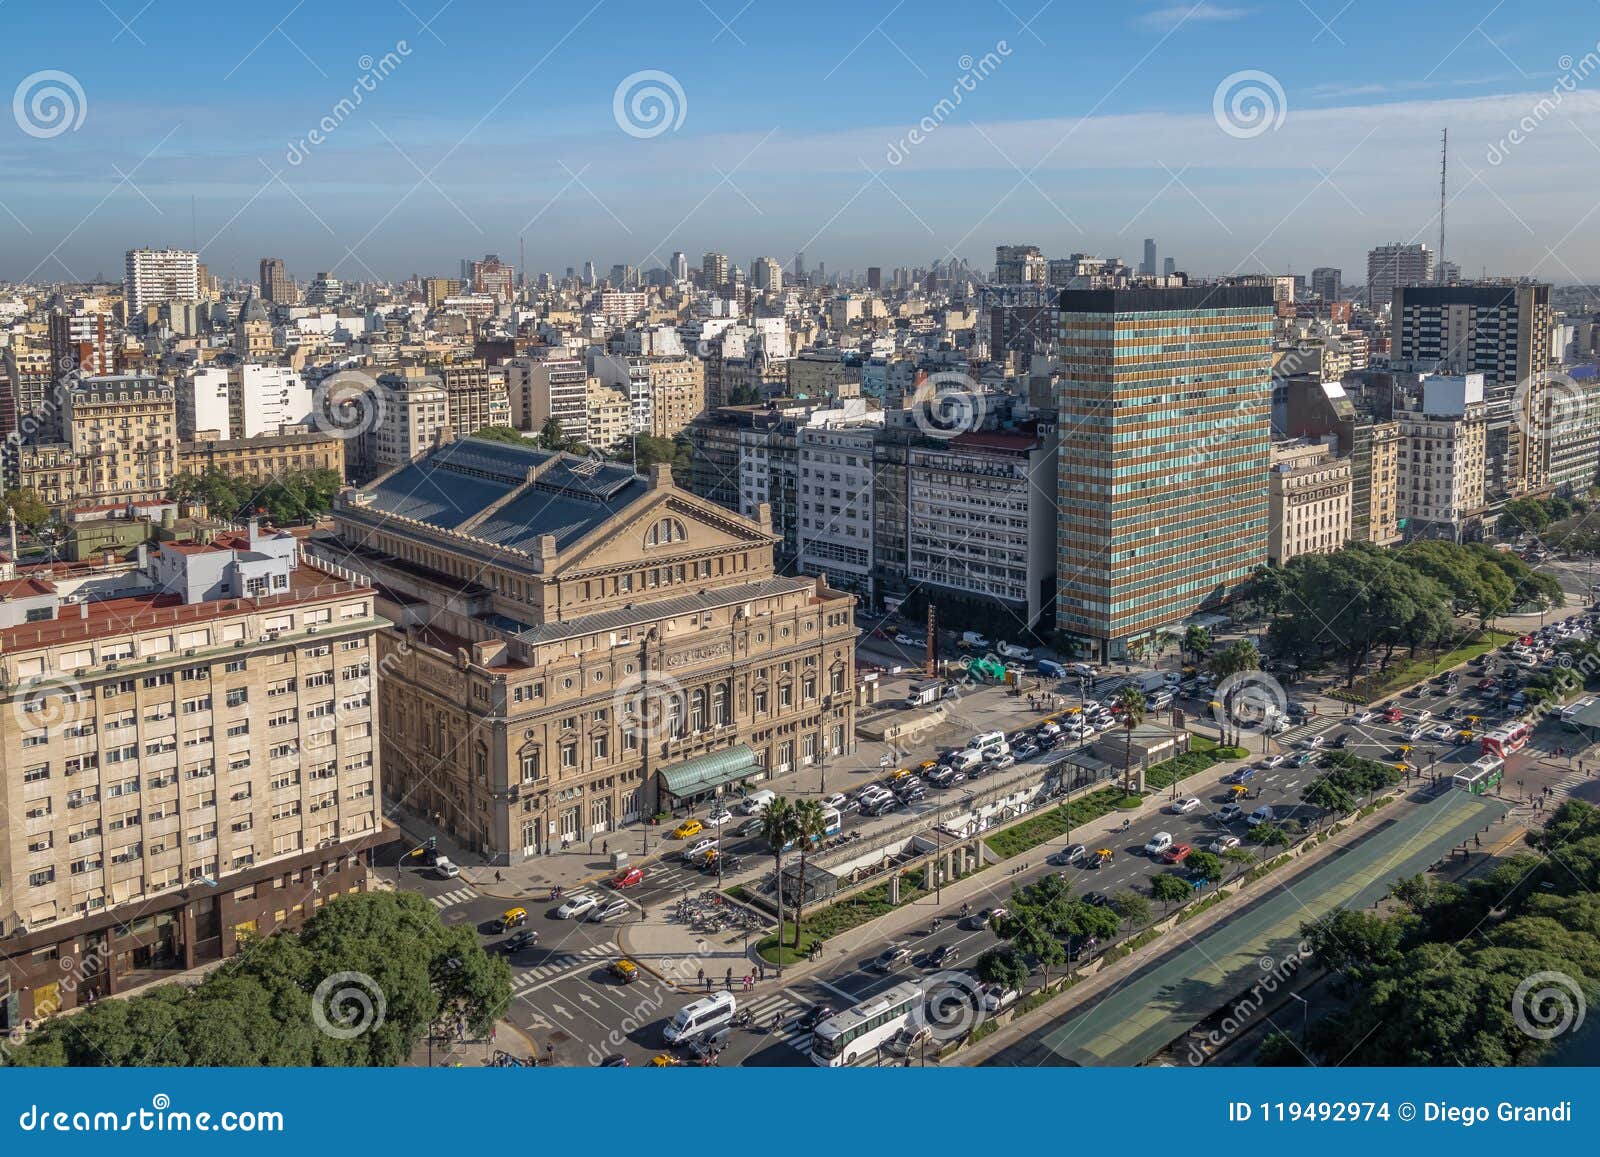 aerial view of 9 de julio avenue - buenos aires, argentina